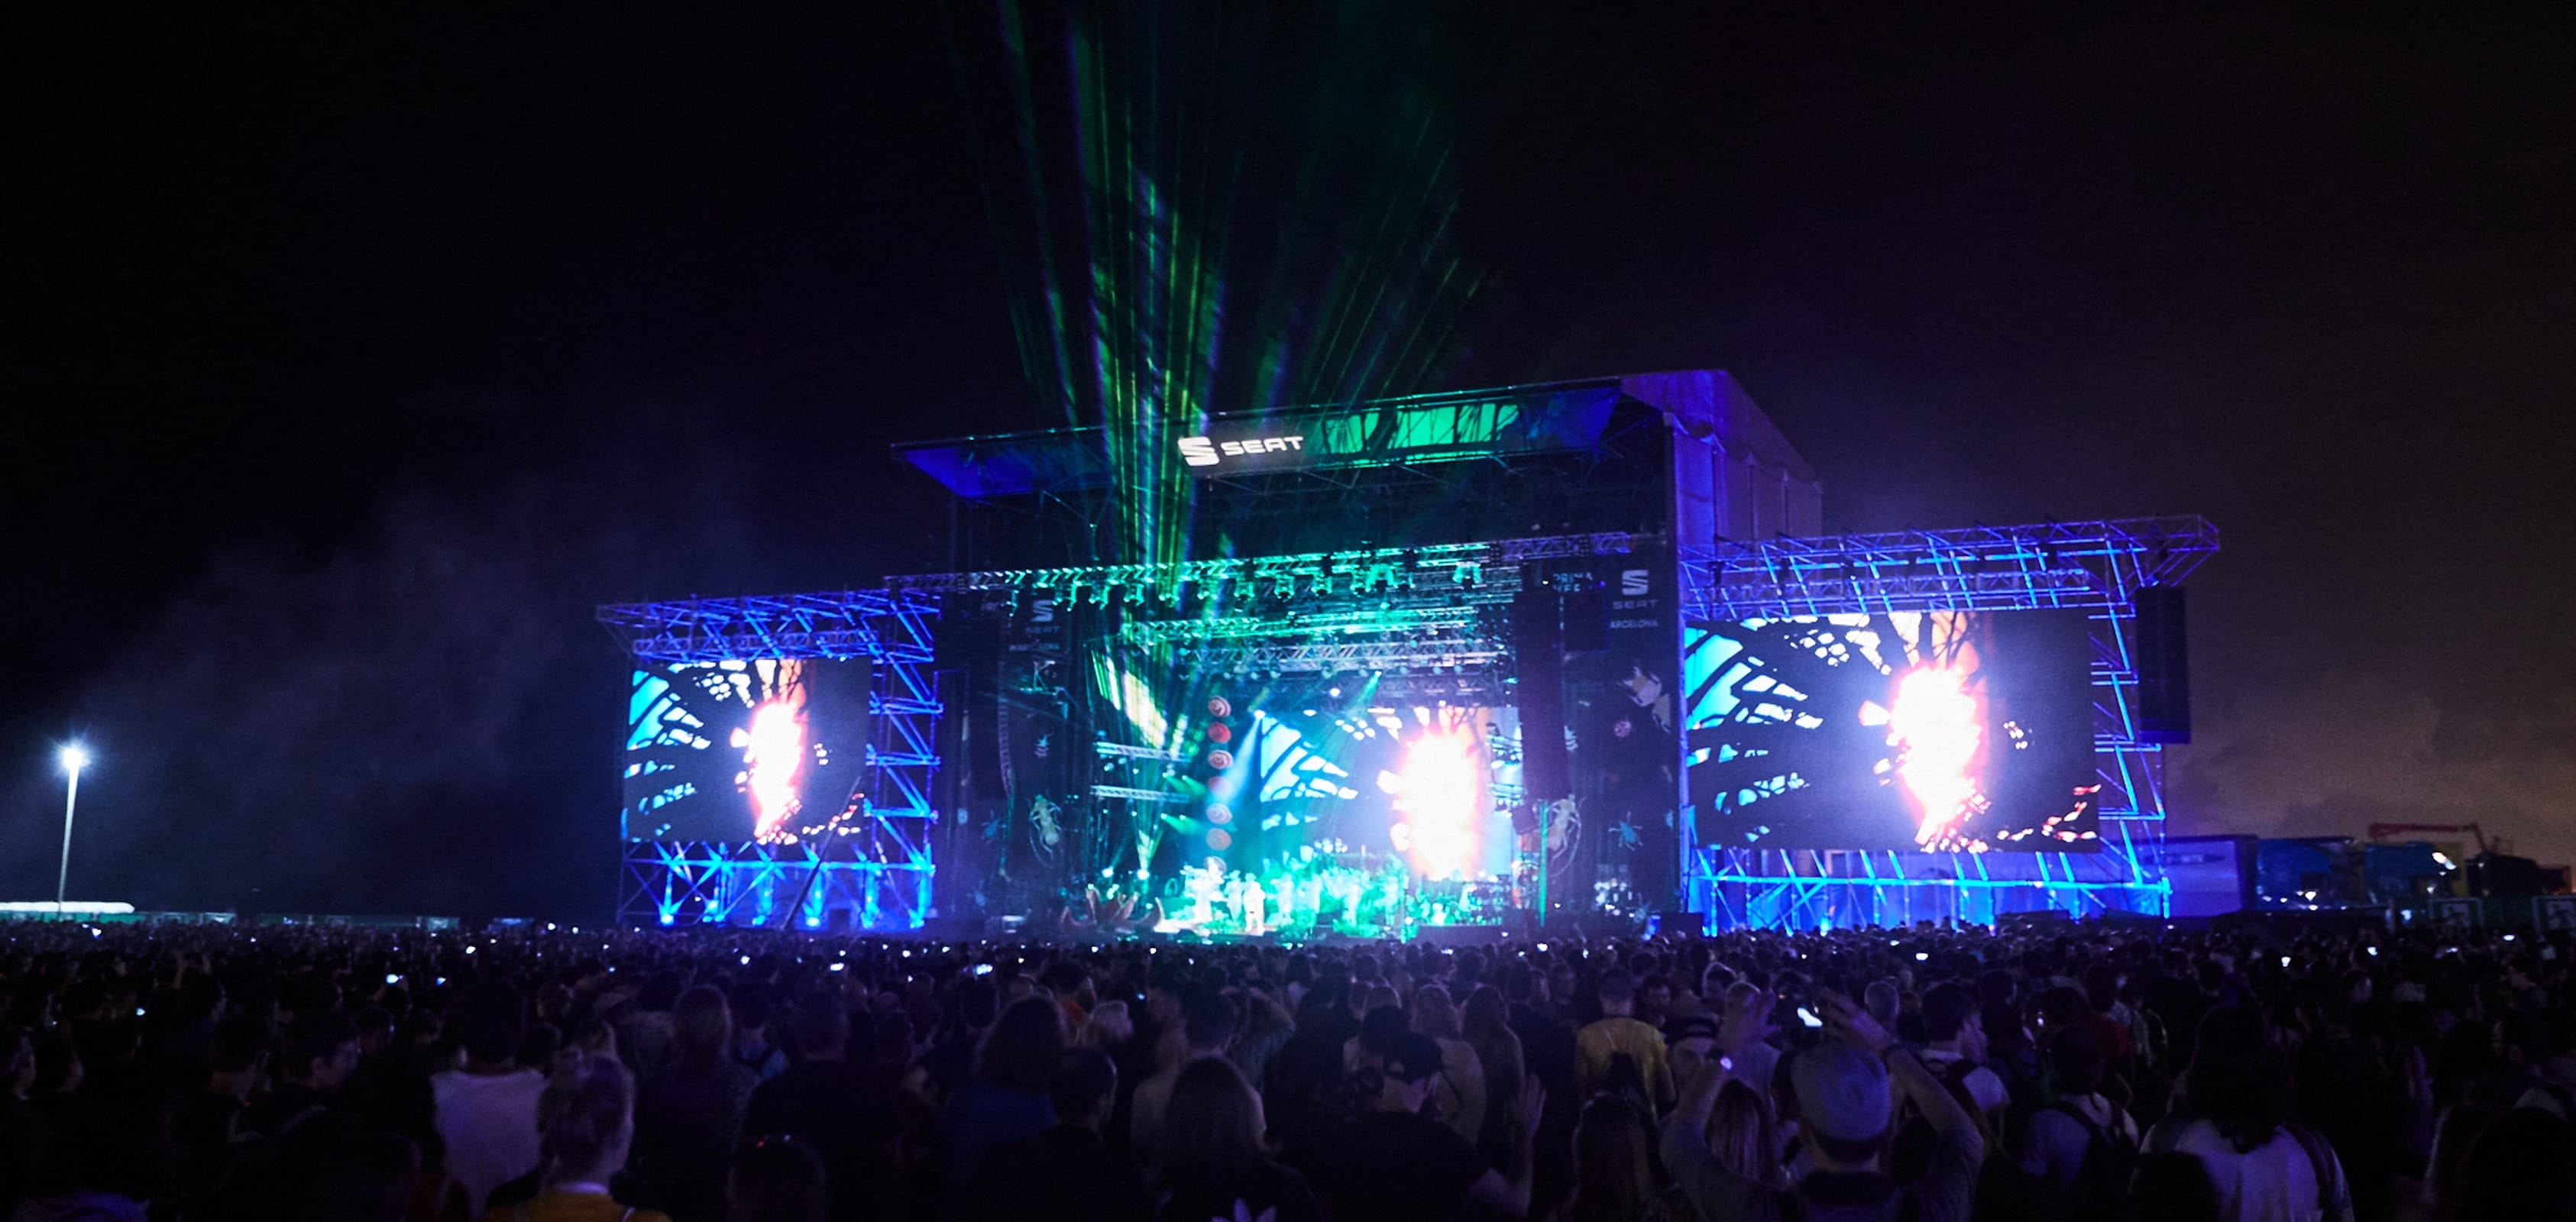 Primavera Sound sponsored by SEAT – Music stage at night